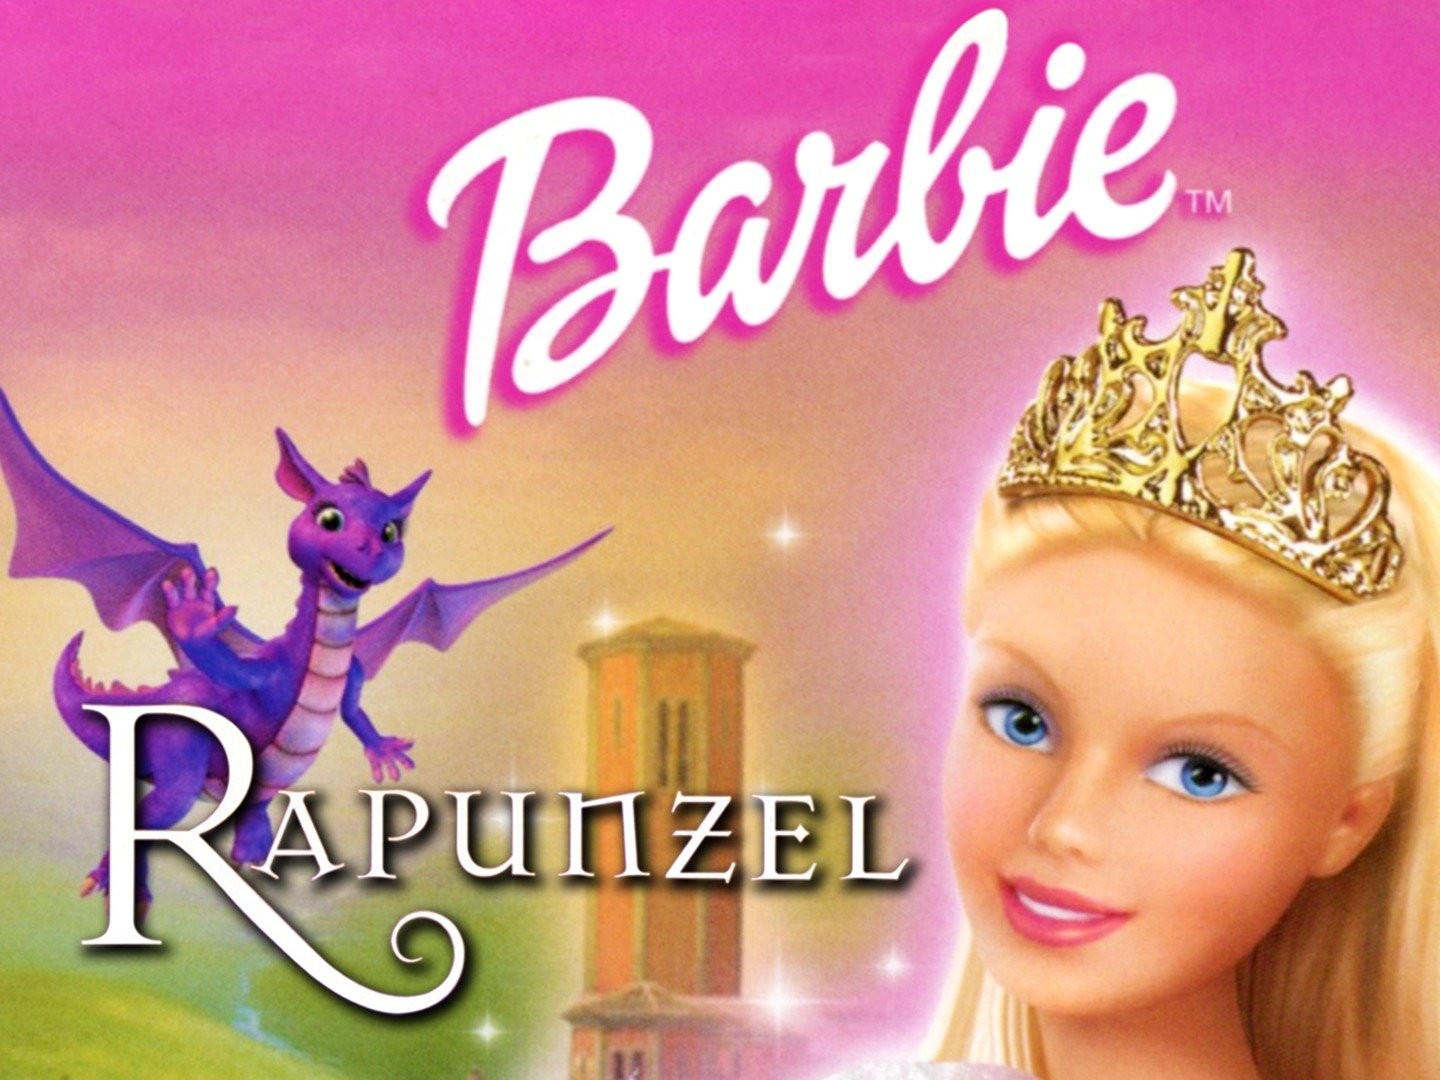 Barbie Rapunzel - Rotten Tomatoes